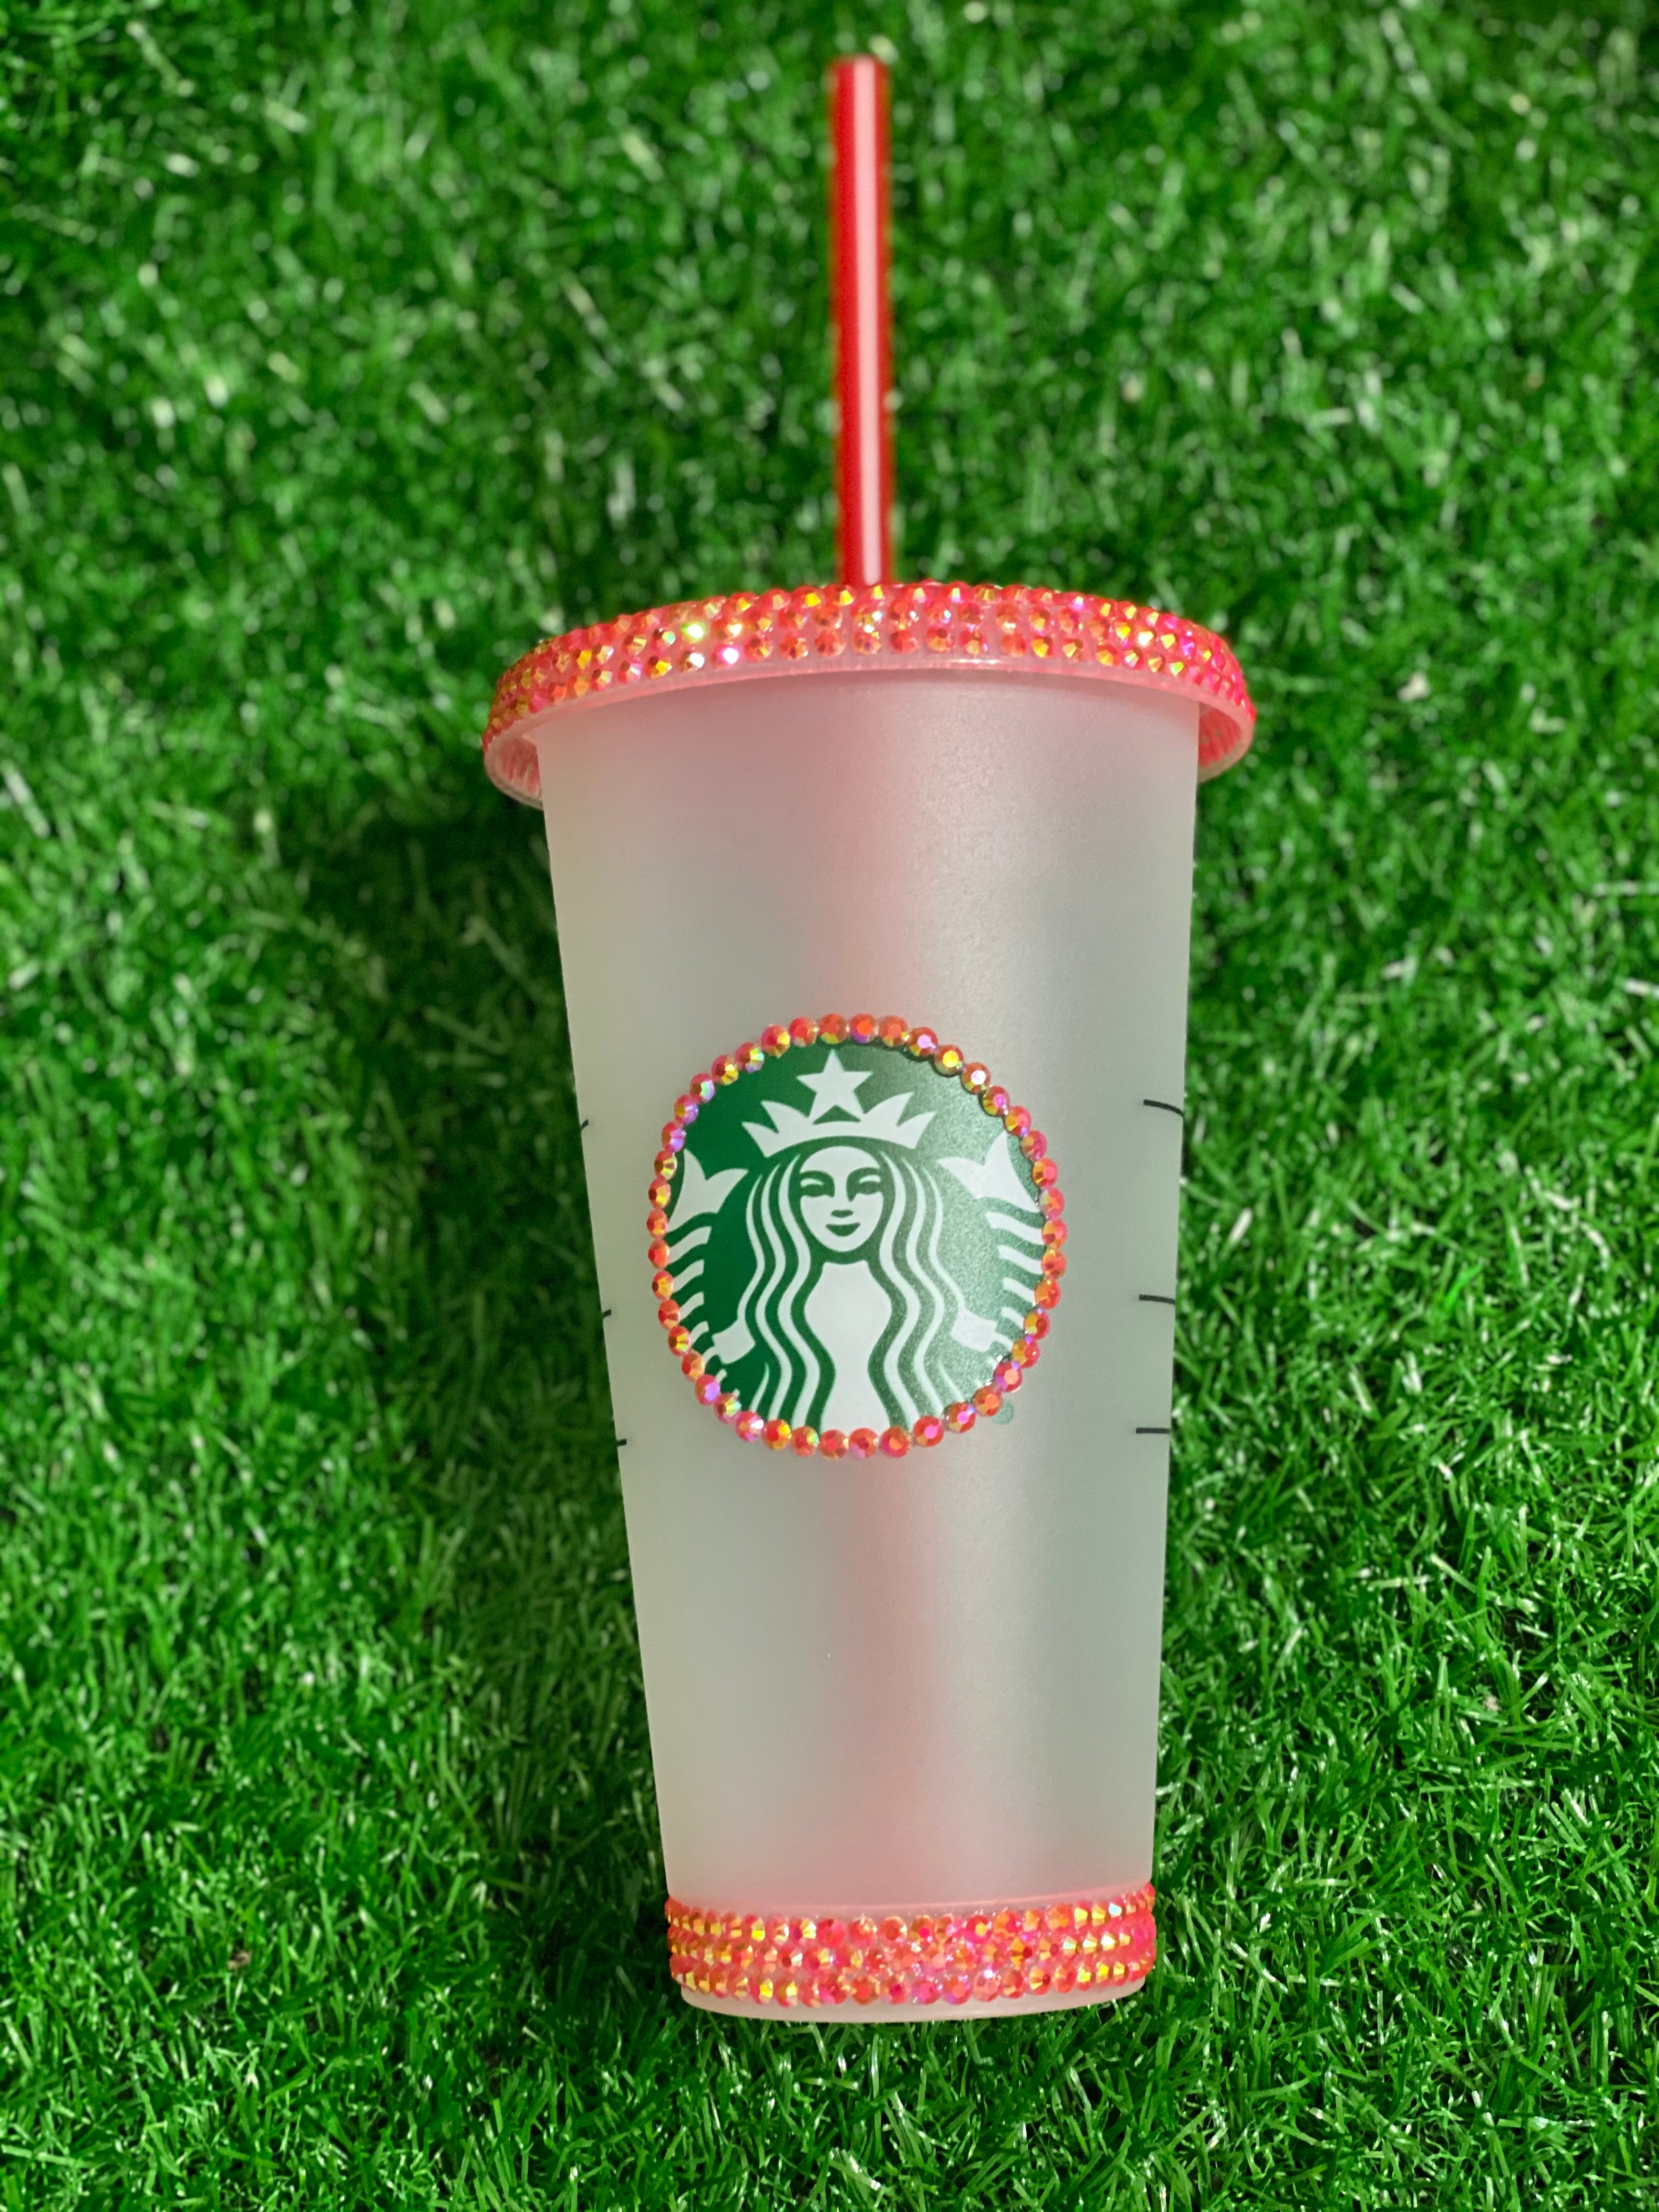 24 oz Green Rhinestone Starbucks Cold Cup